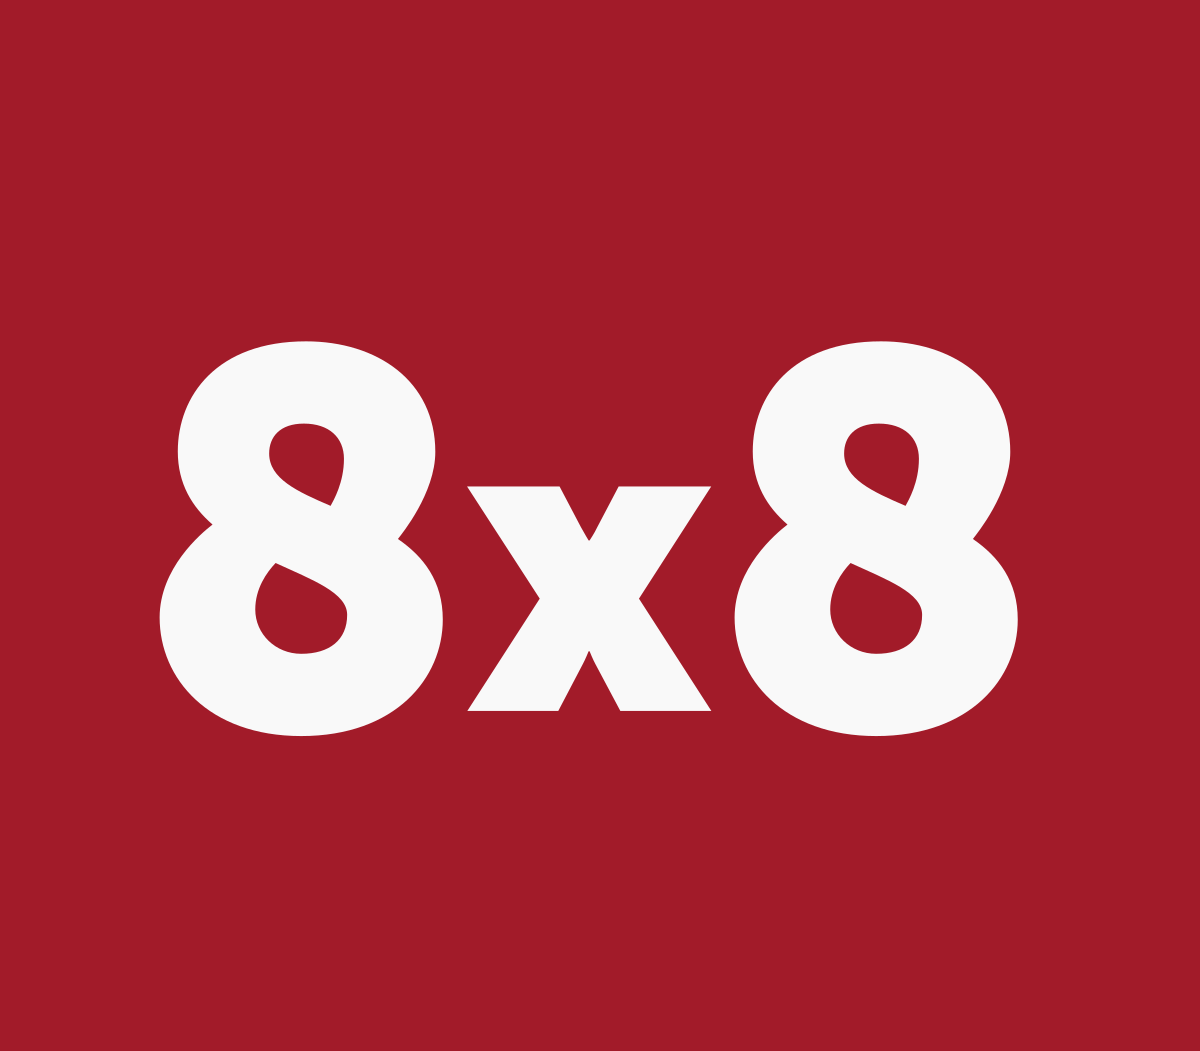 8x8 - logo